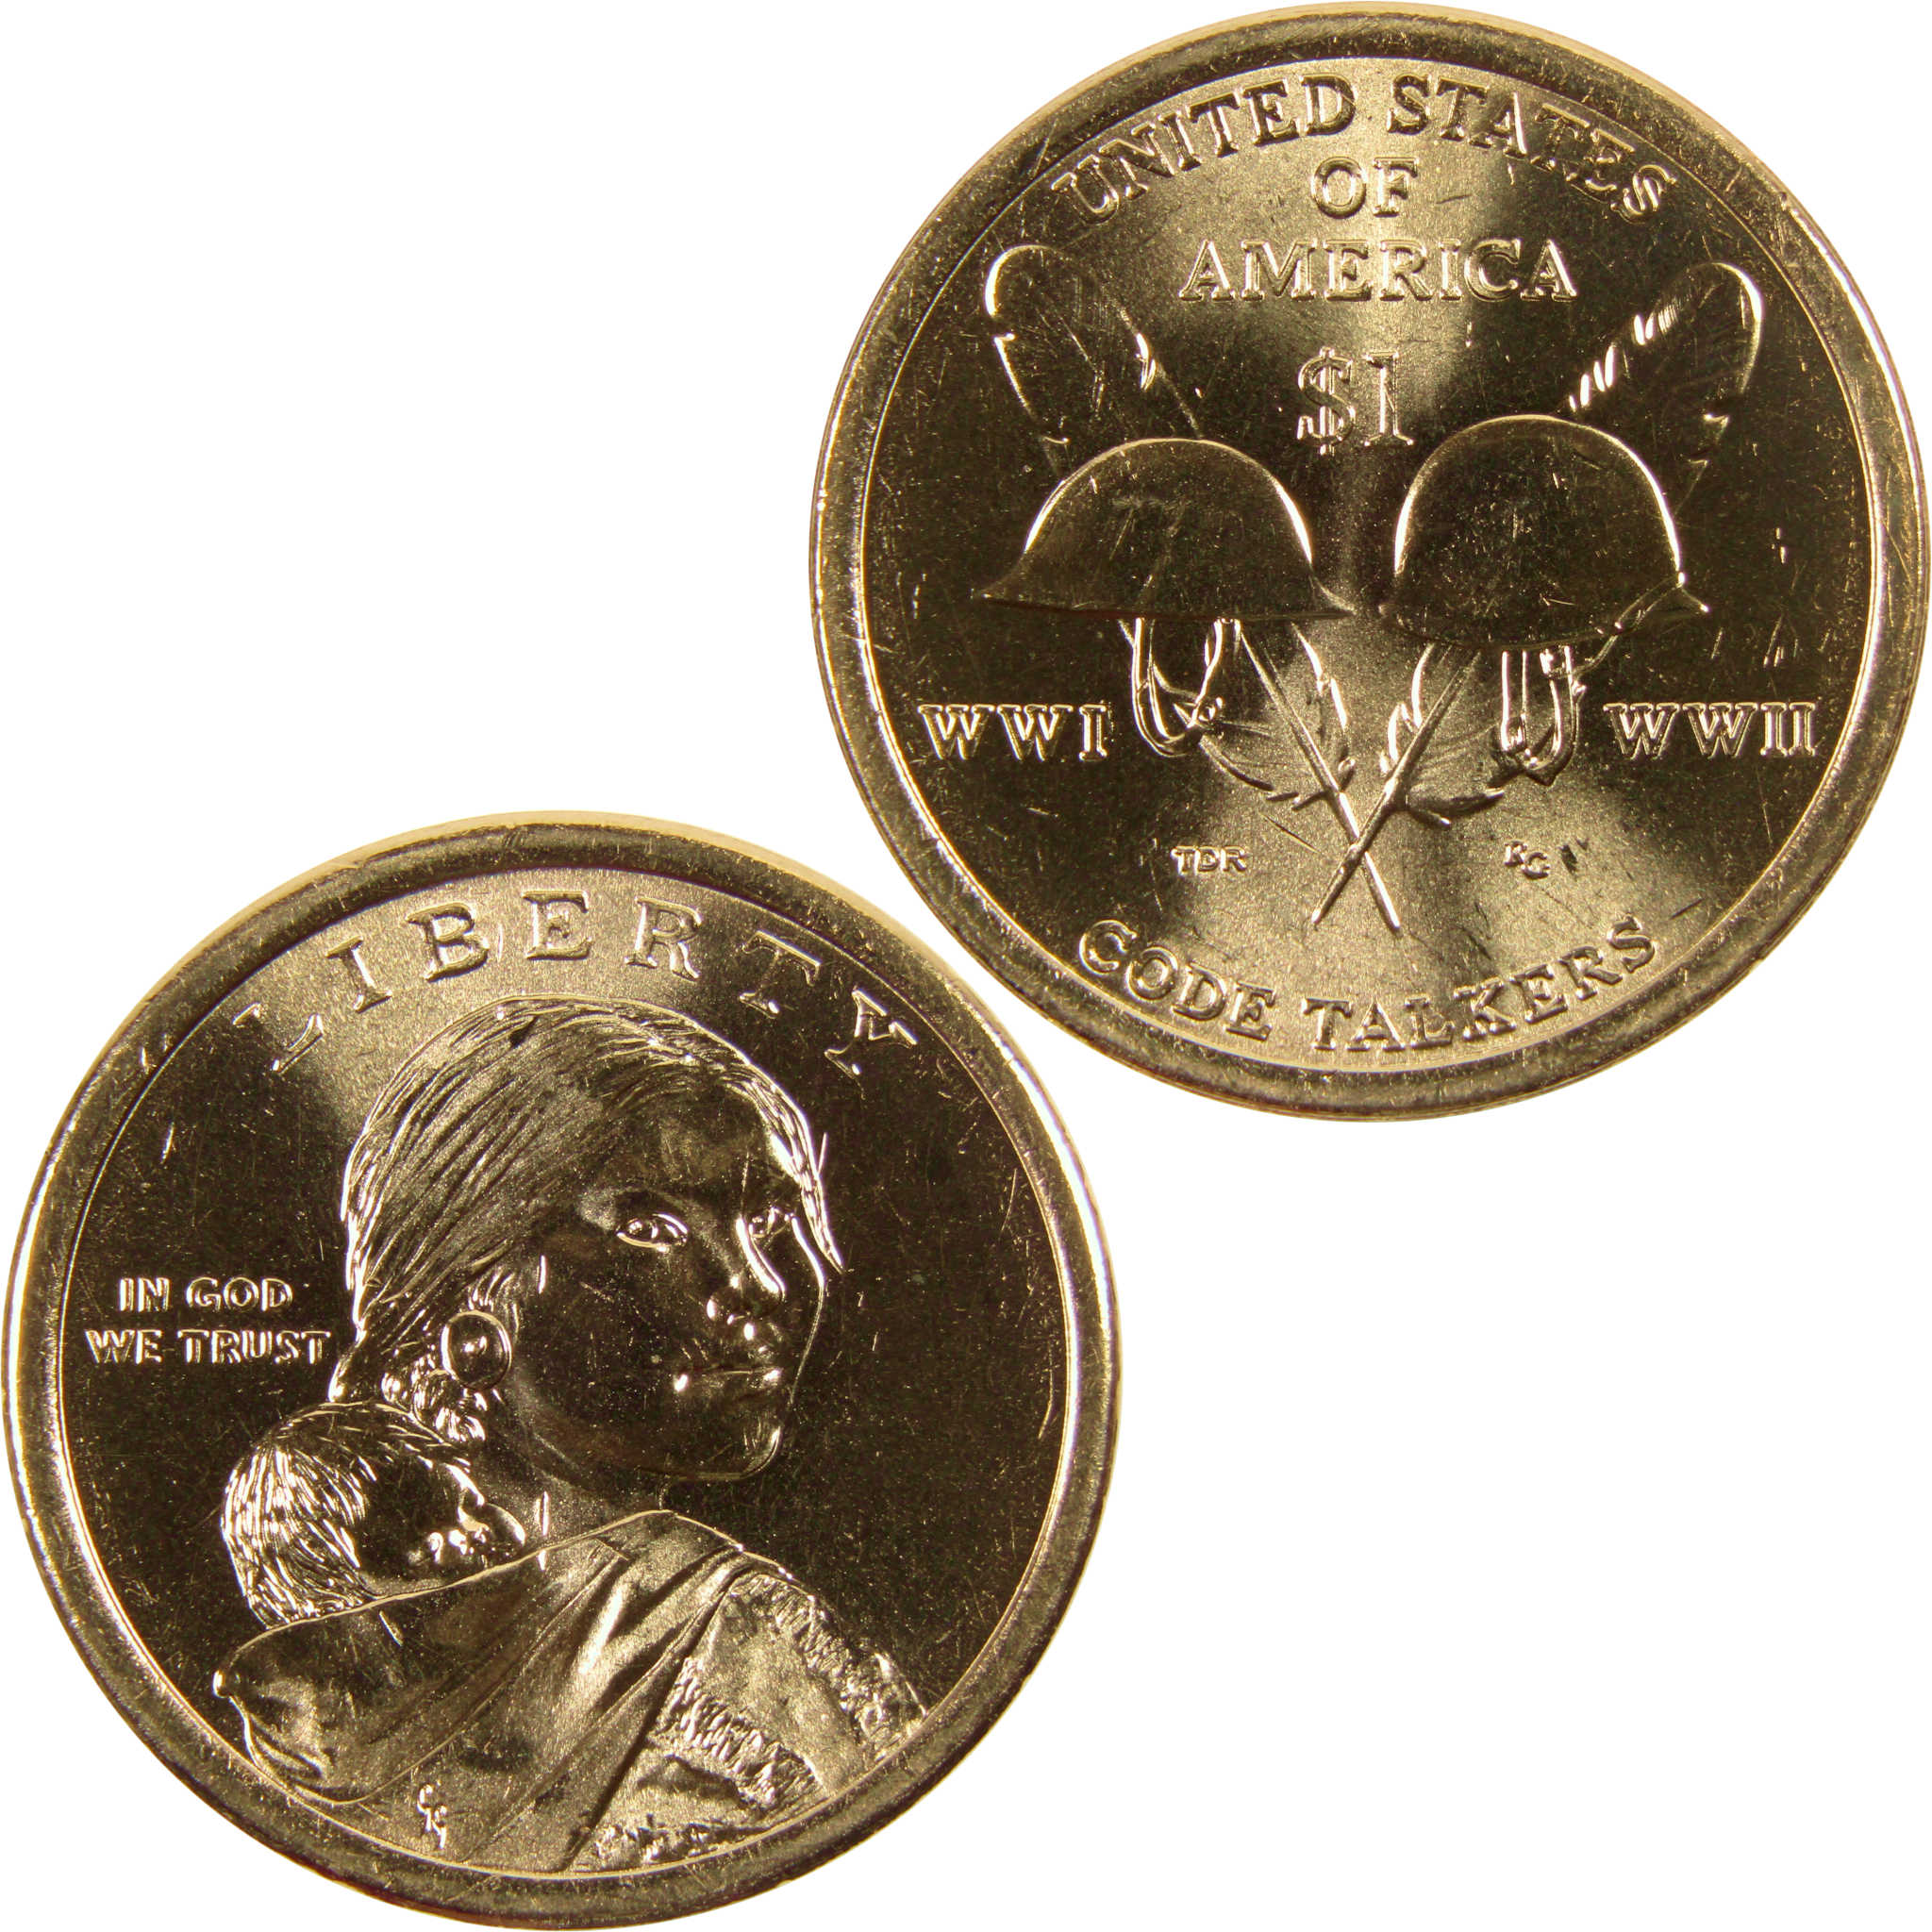 2016 D Code Talkers Native American Dollar BU Uncirculated $1 Coin